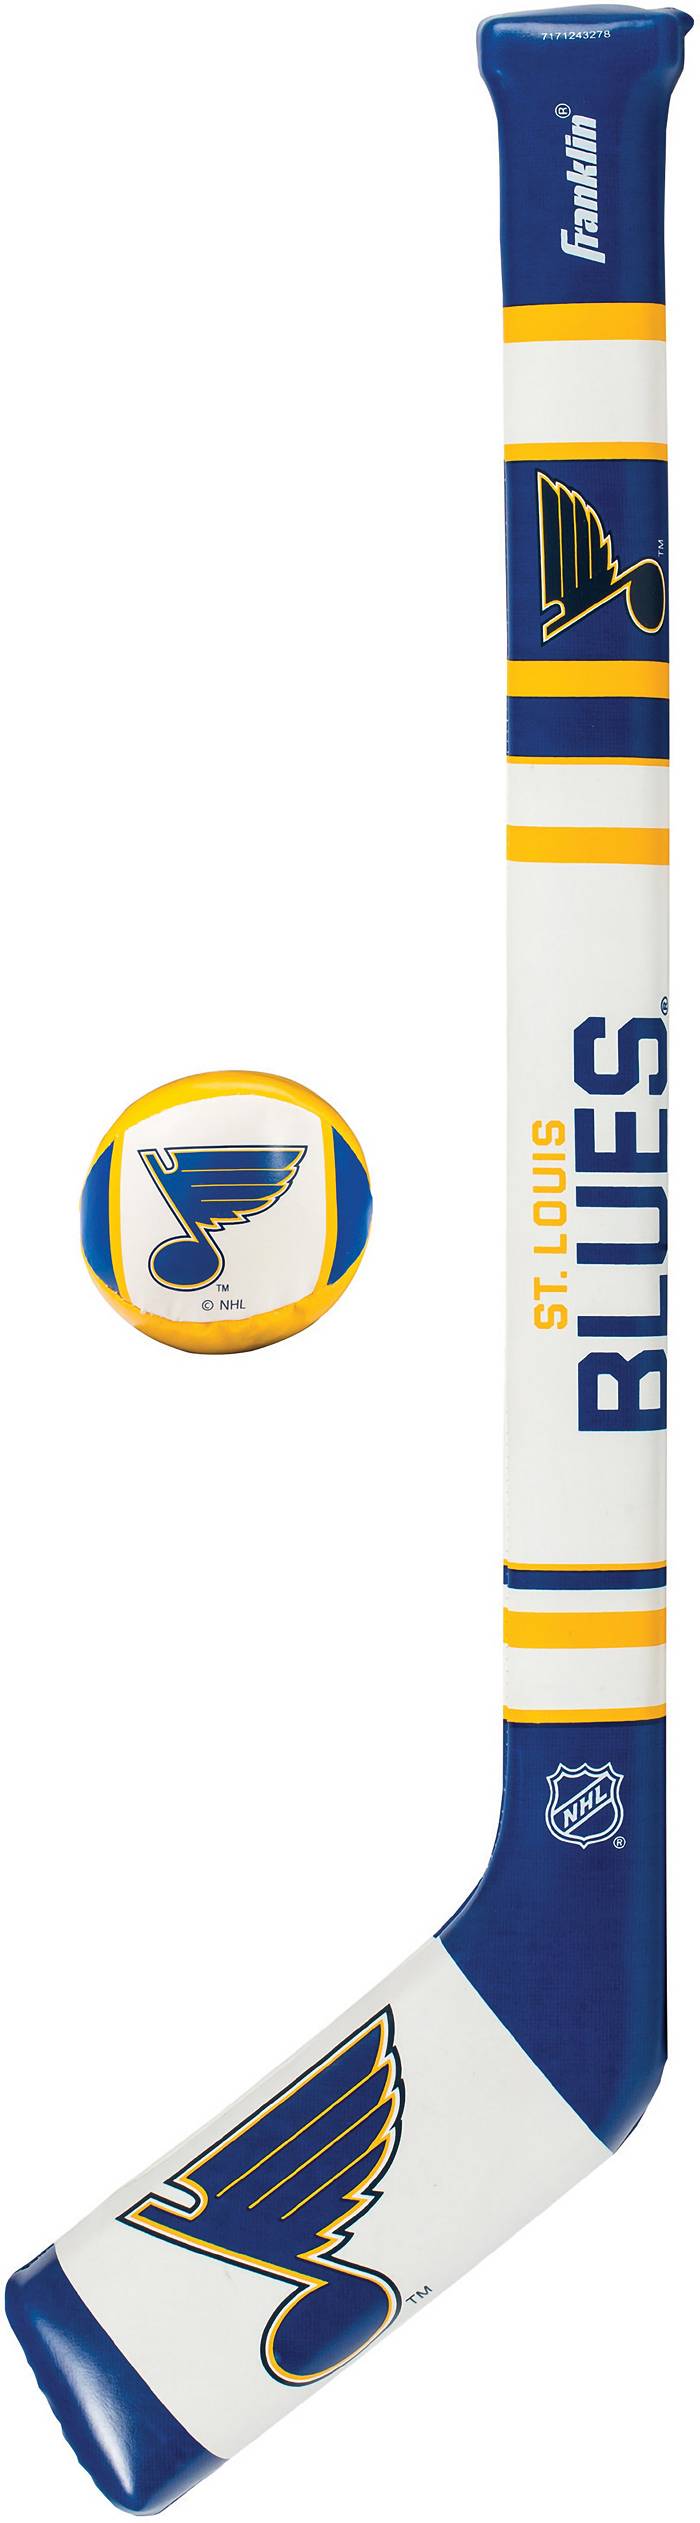 Dick's Sporting Goods NHL St. Louis Blues Jordan Binnington #50